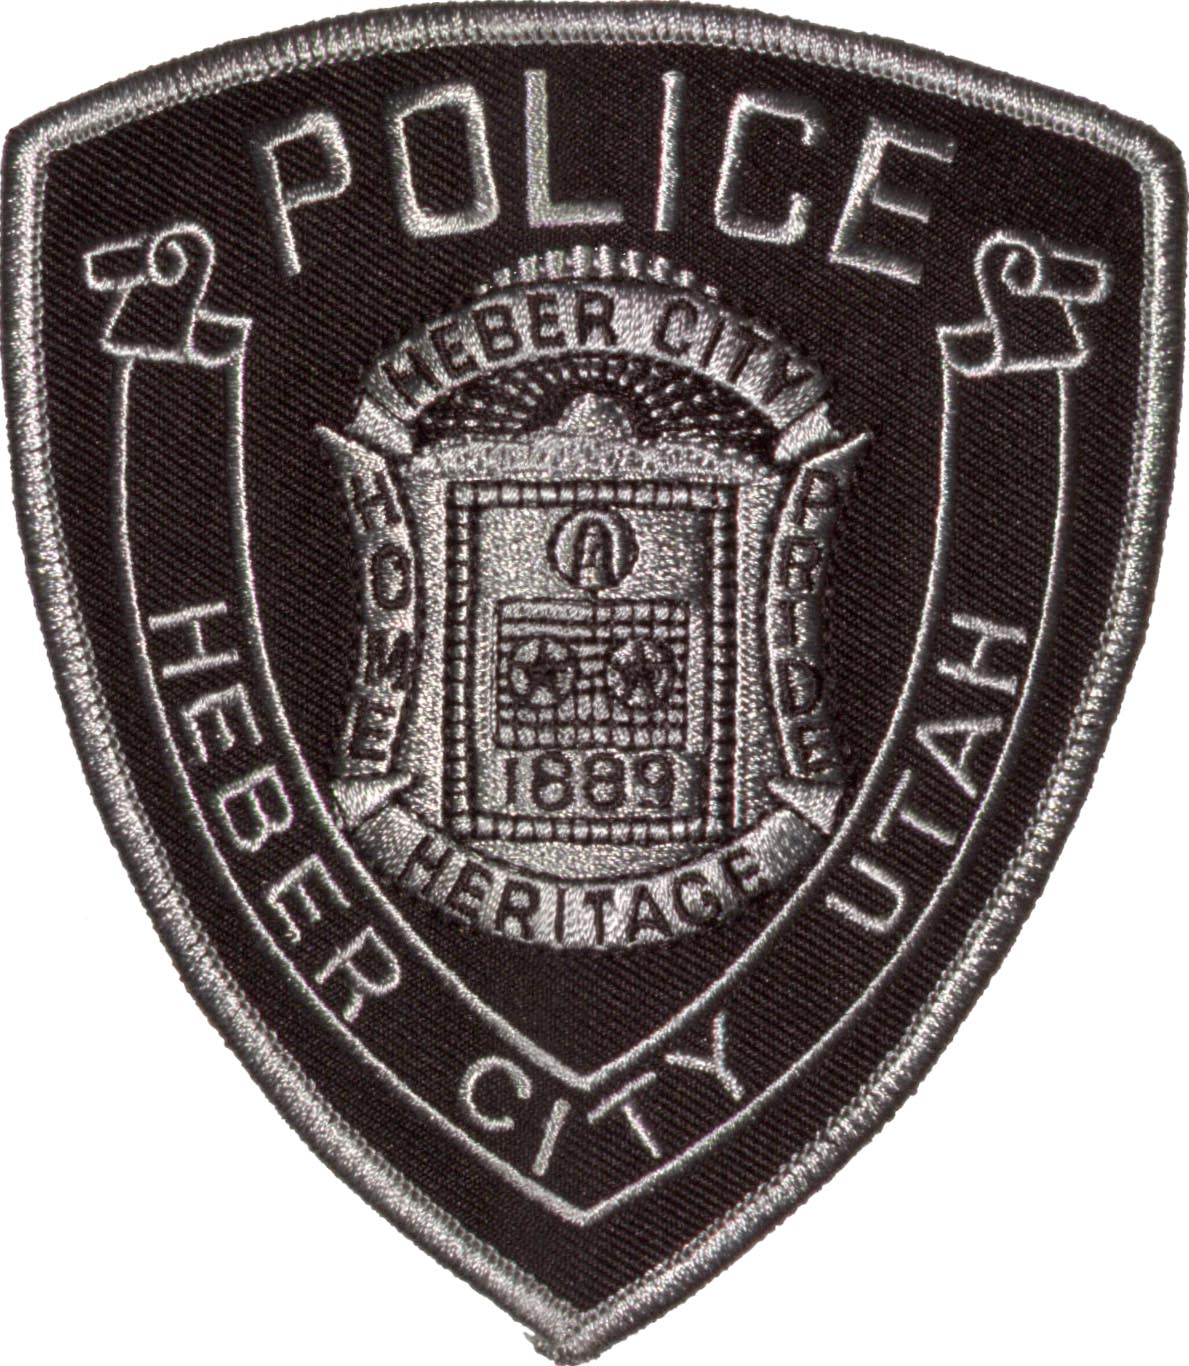 Police Emblems